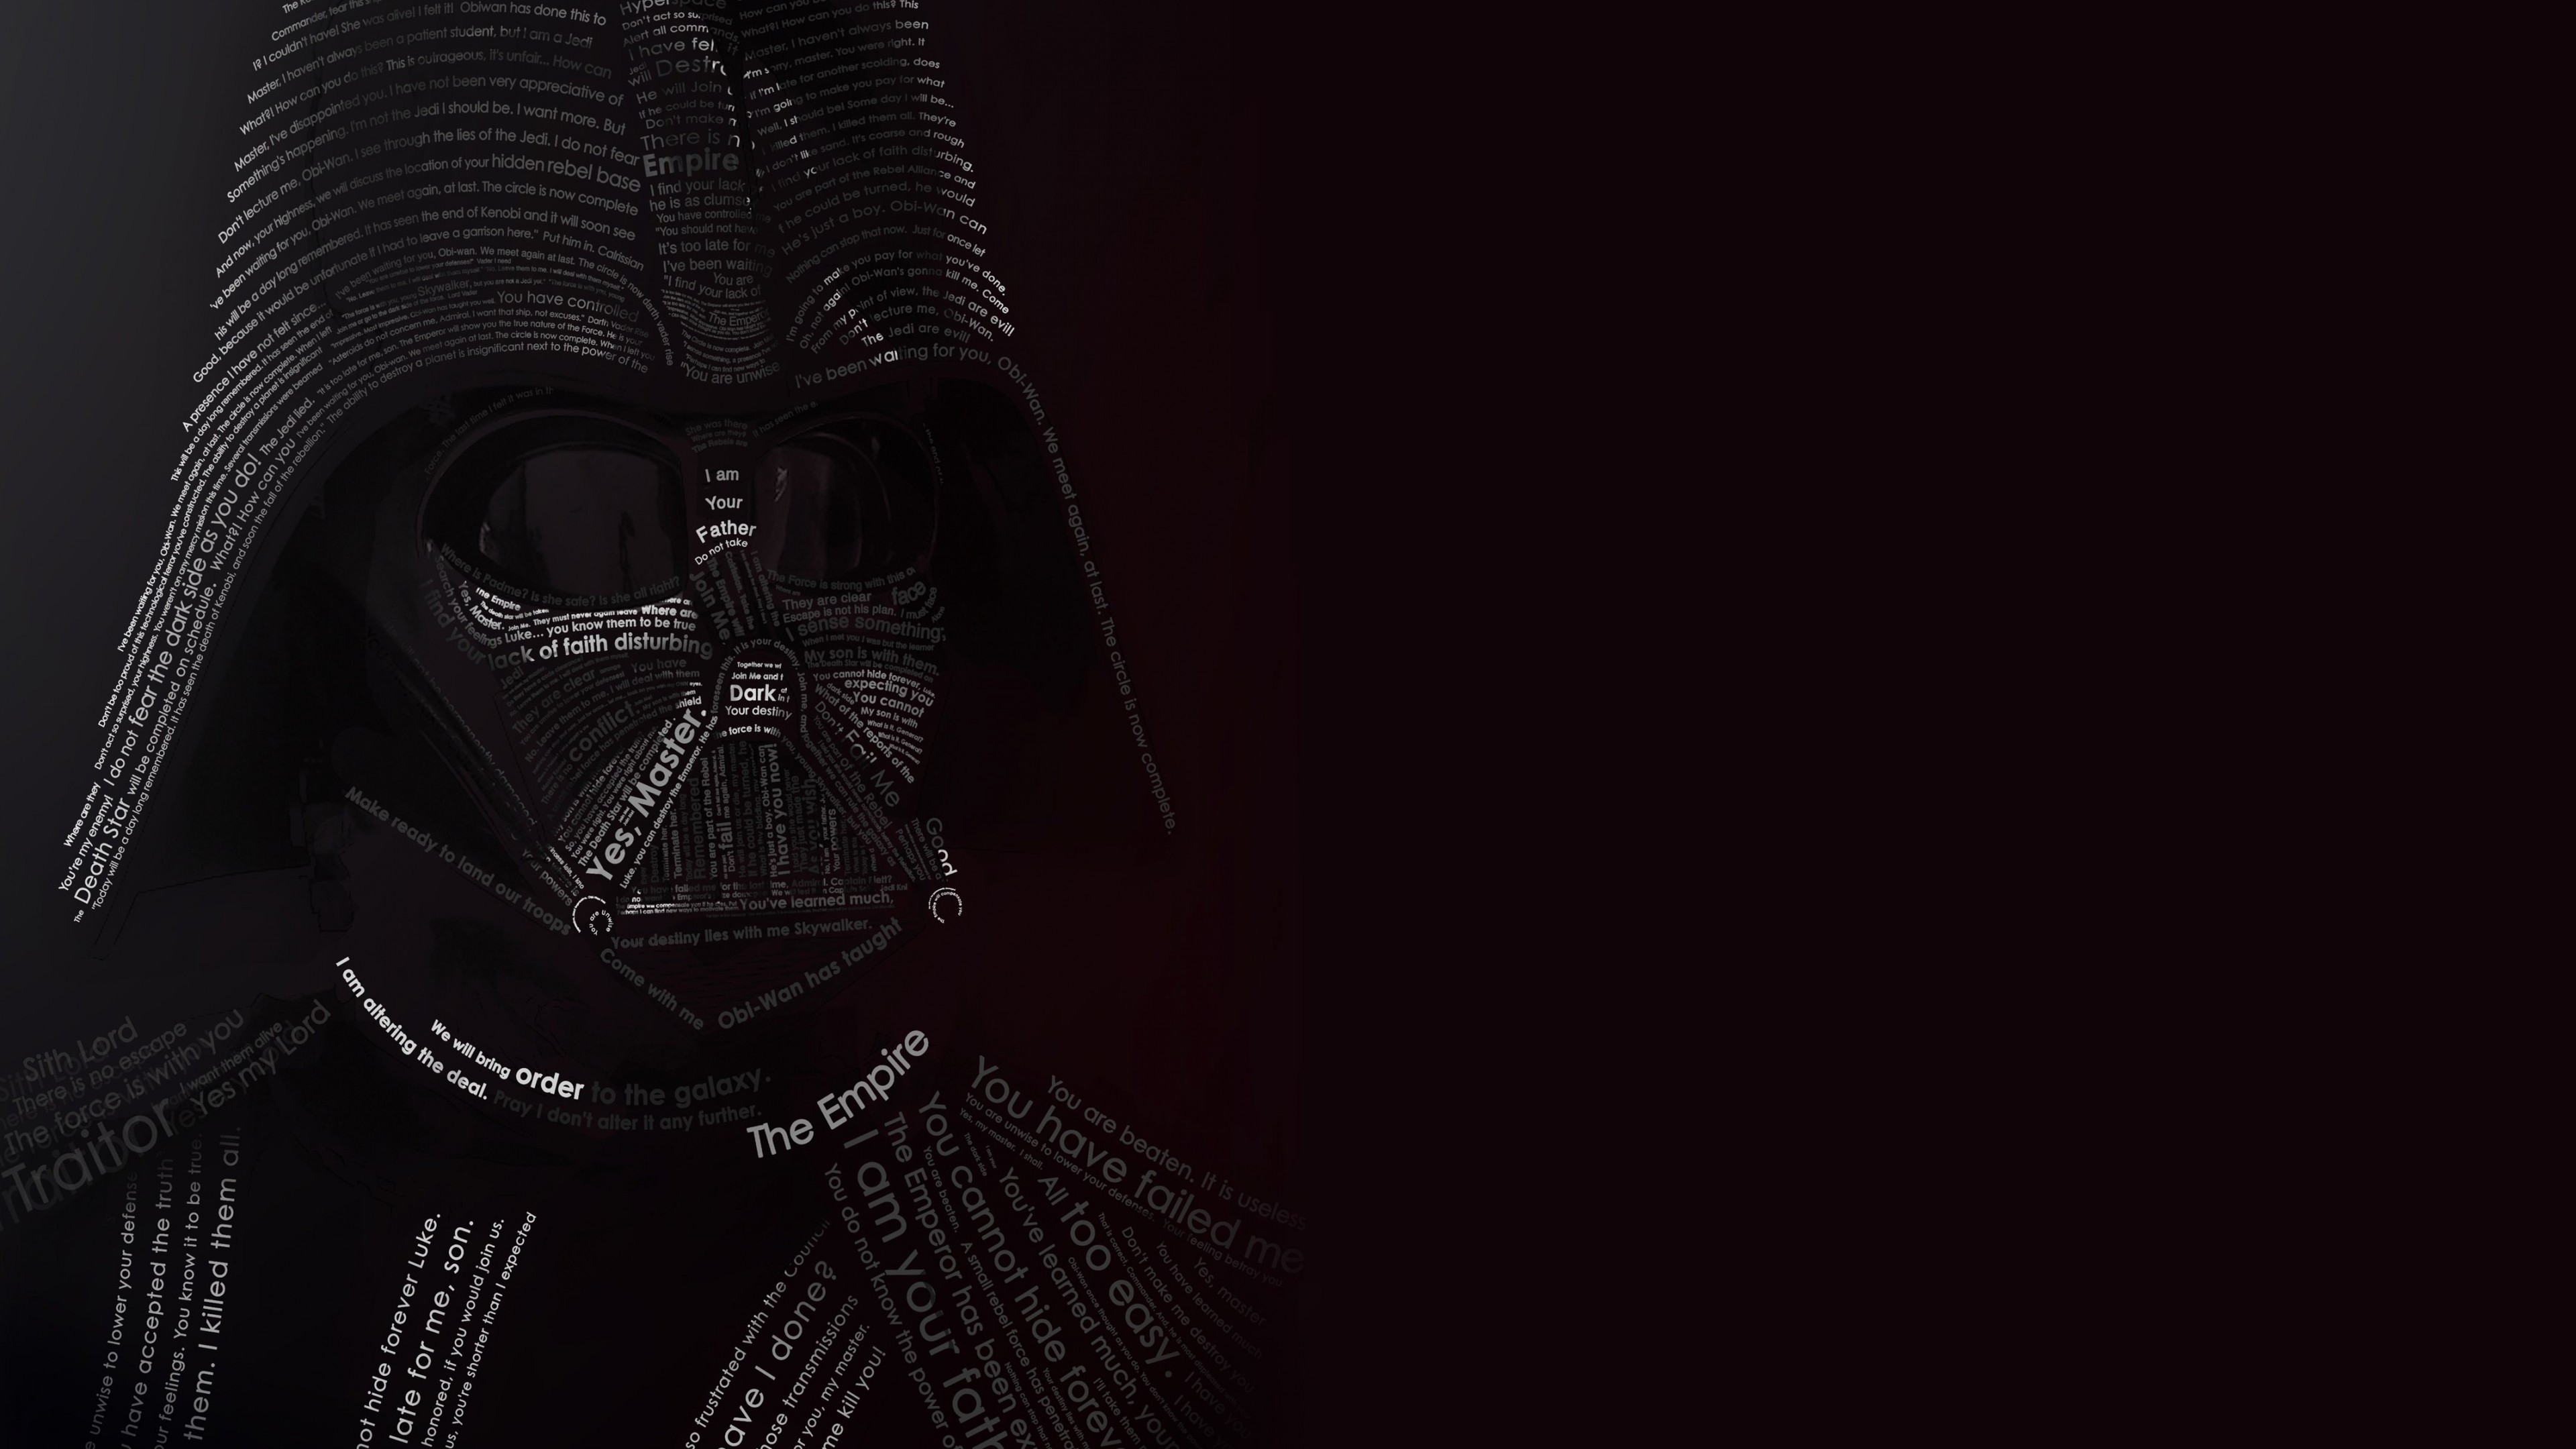 Darth Vader Typographic Portrait Wallpaper for Desktop 4K 3840x2160